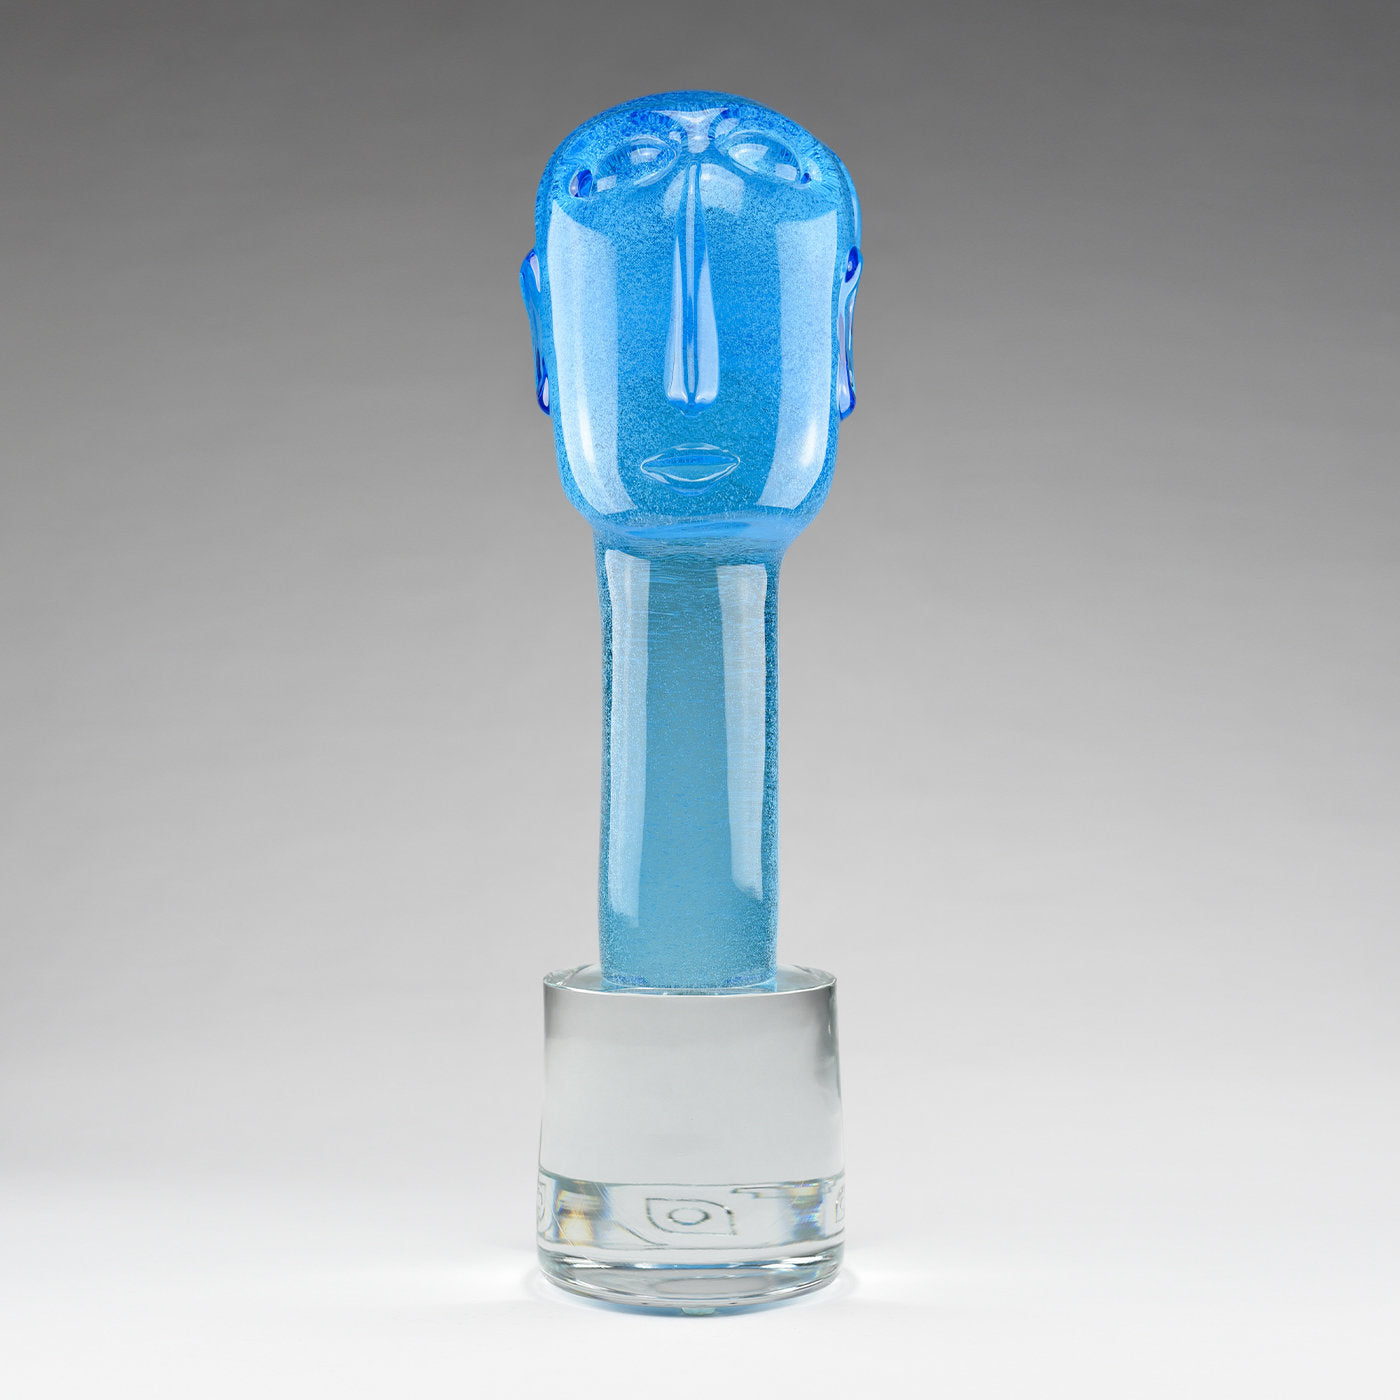 Volto Ovale Light-Blue Glass Sculpture - Alternative view 1